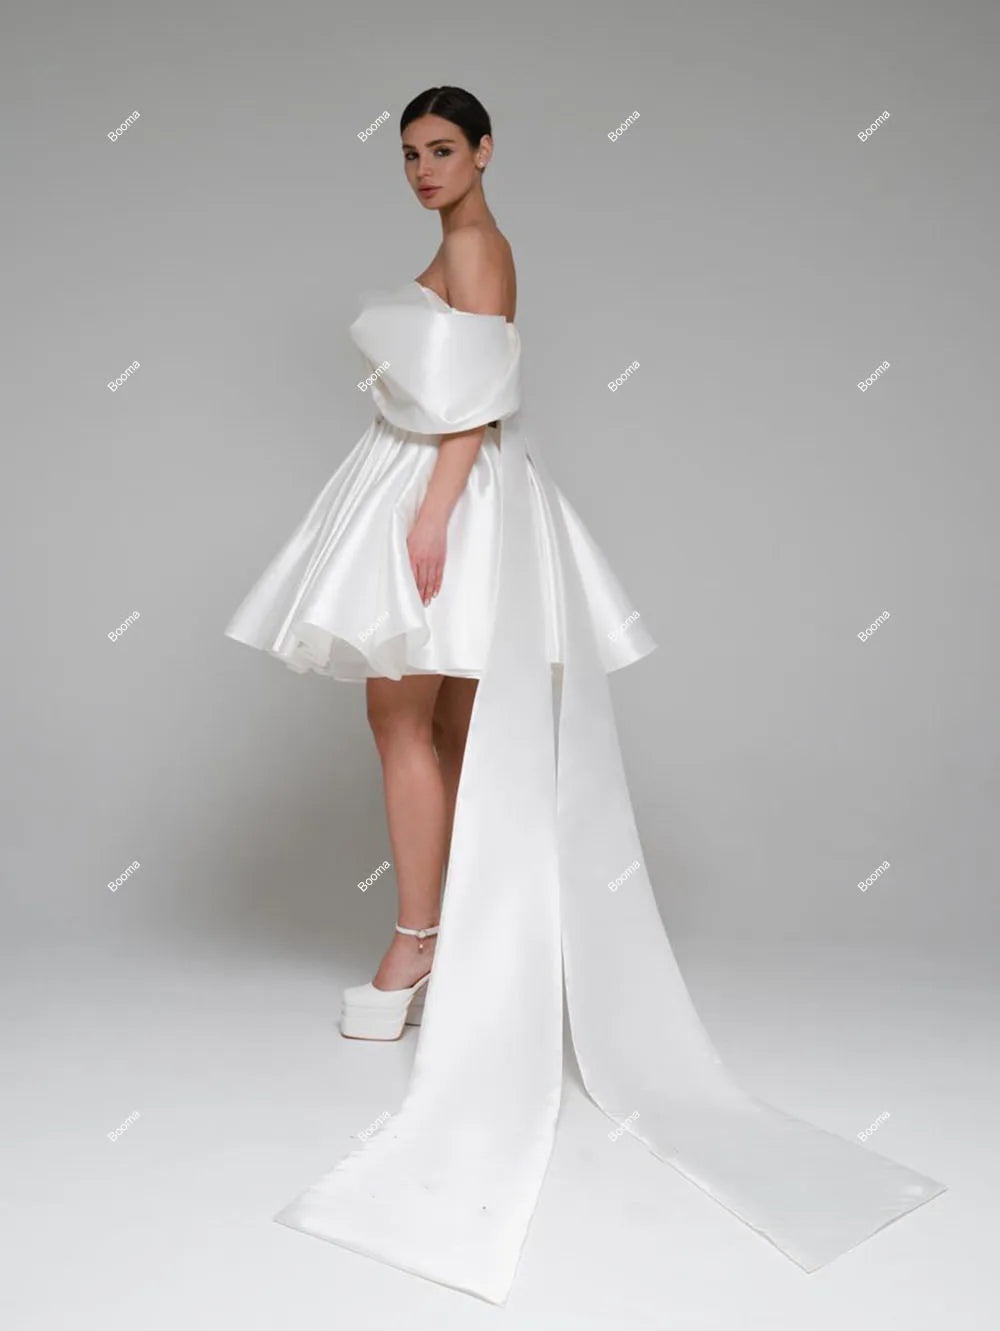 Gaun Pesta Pernikahan Pendek Putih dari Gaun Bola Bahu Mini Bride Gowns Lace Up Bridal Evening Dresses Untuk Wanita